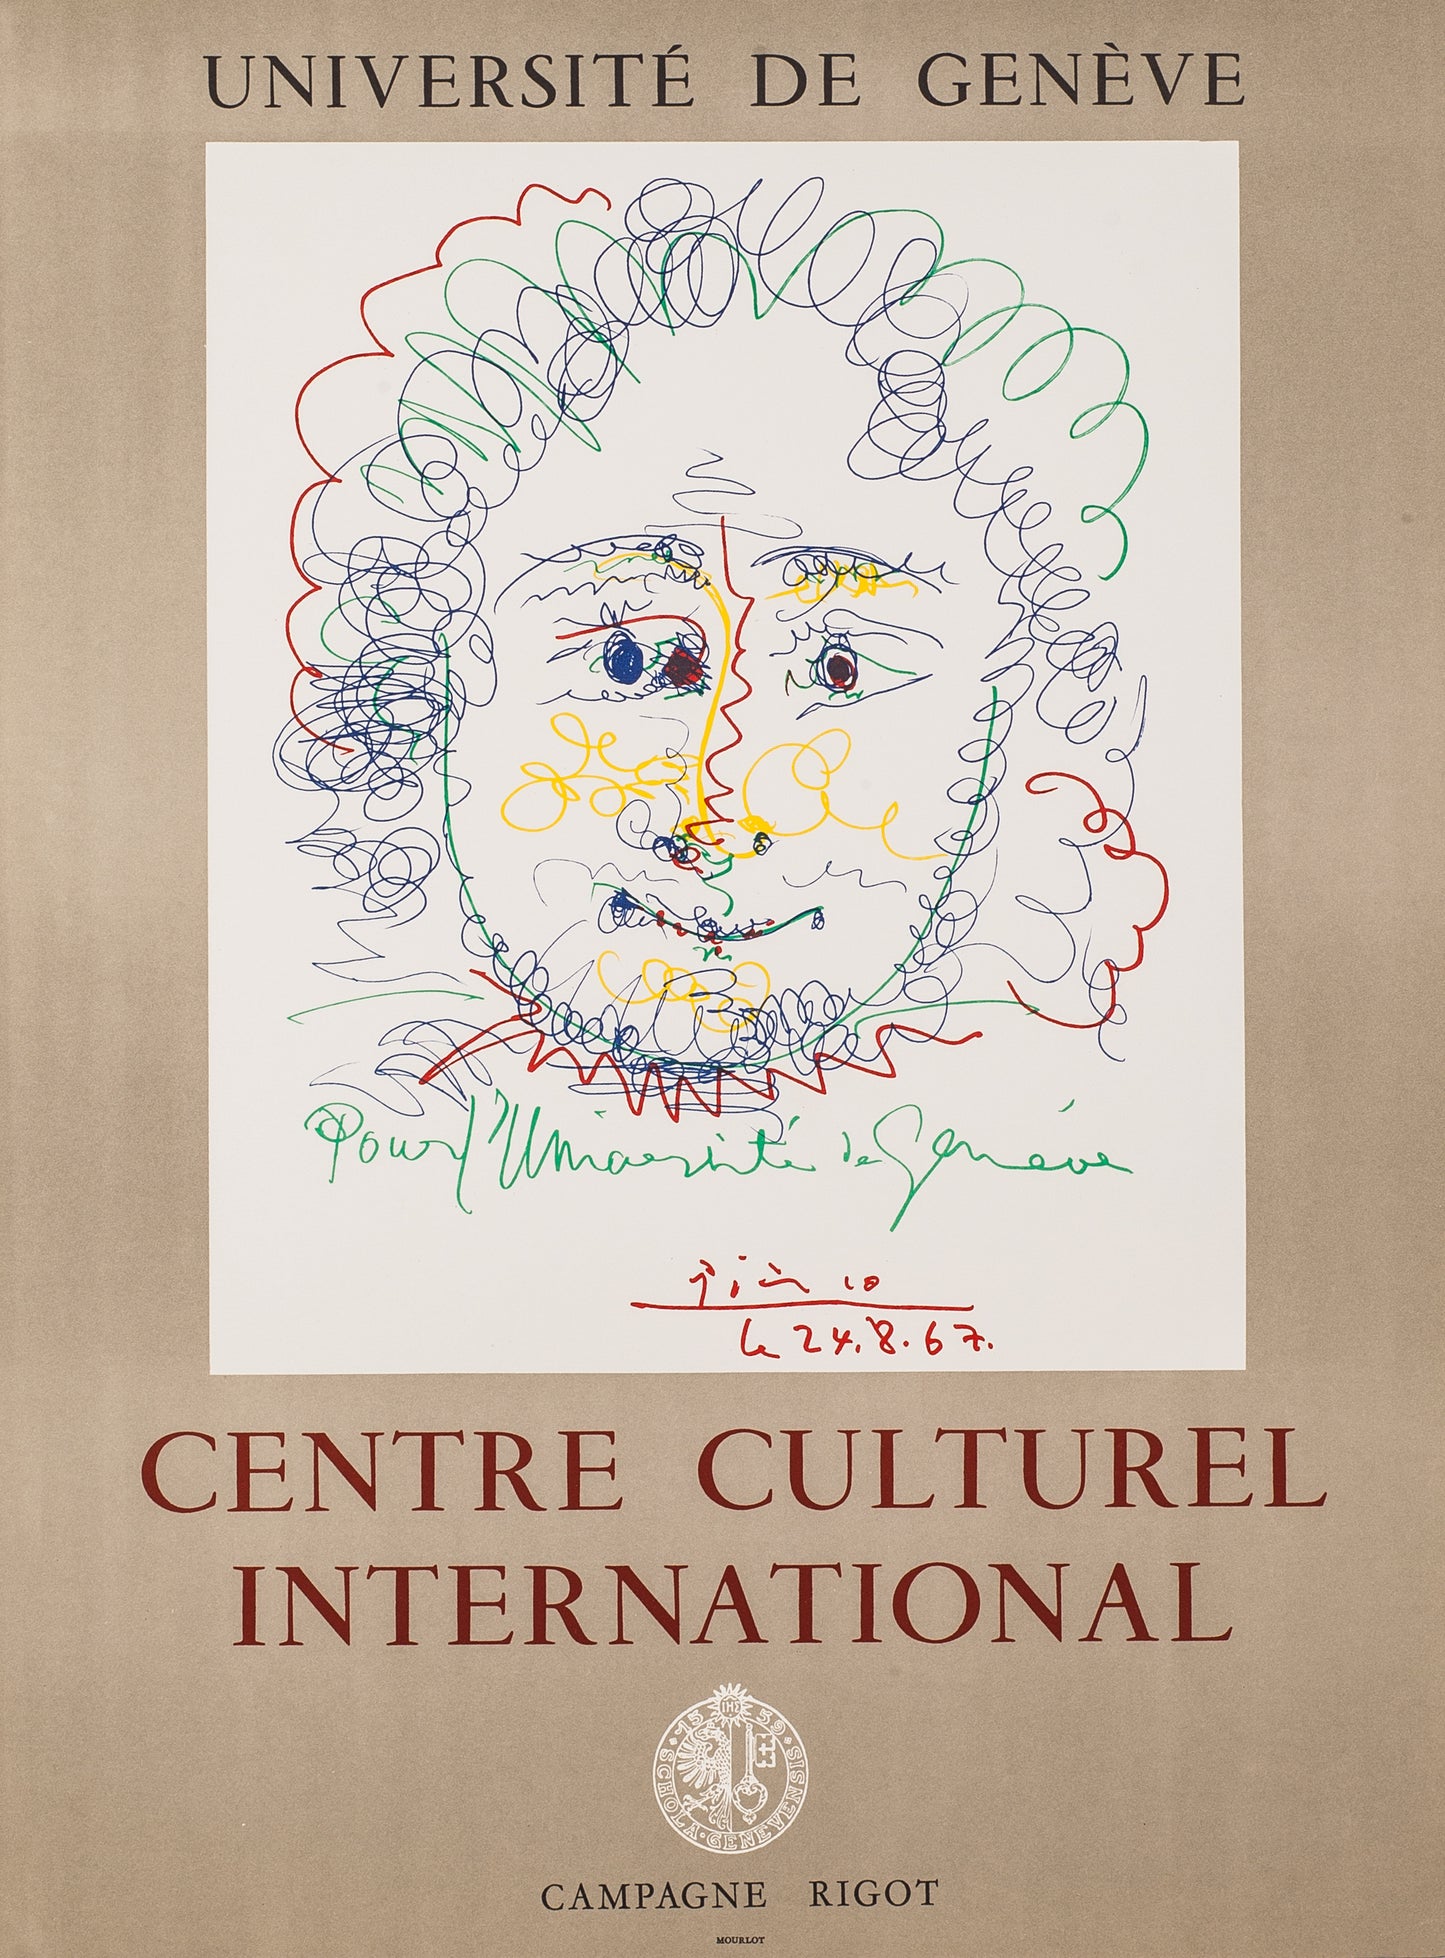 Centre Culturel International (after) Pablo Picasso, 1968 - Mourlot Editions - Fine_Art - Poster - Lithograph - Wall Art - Vintage - Prints - Original